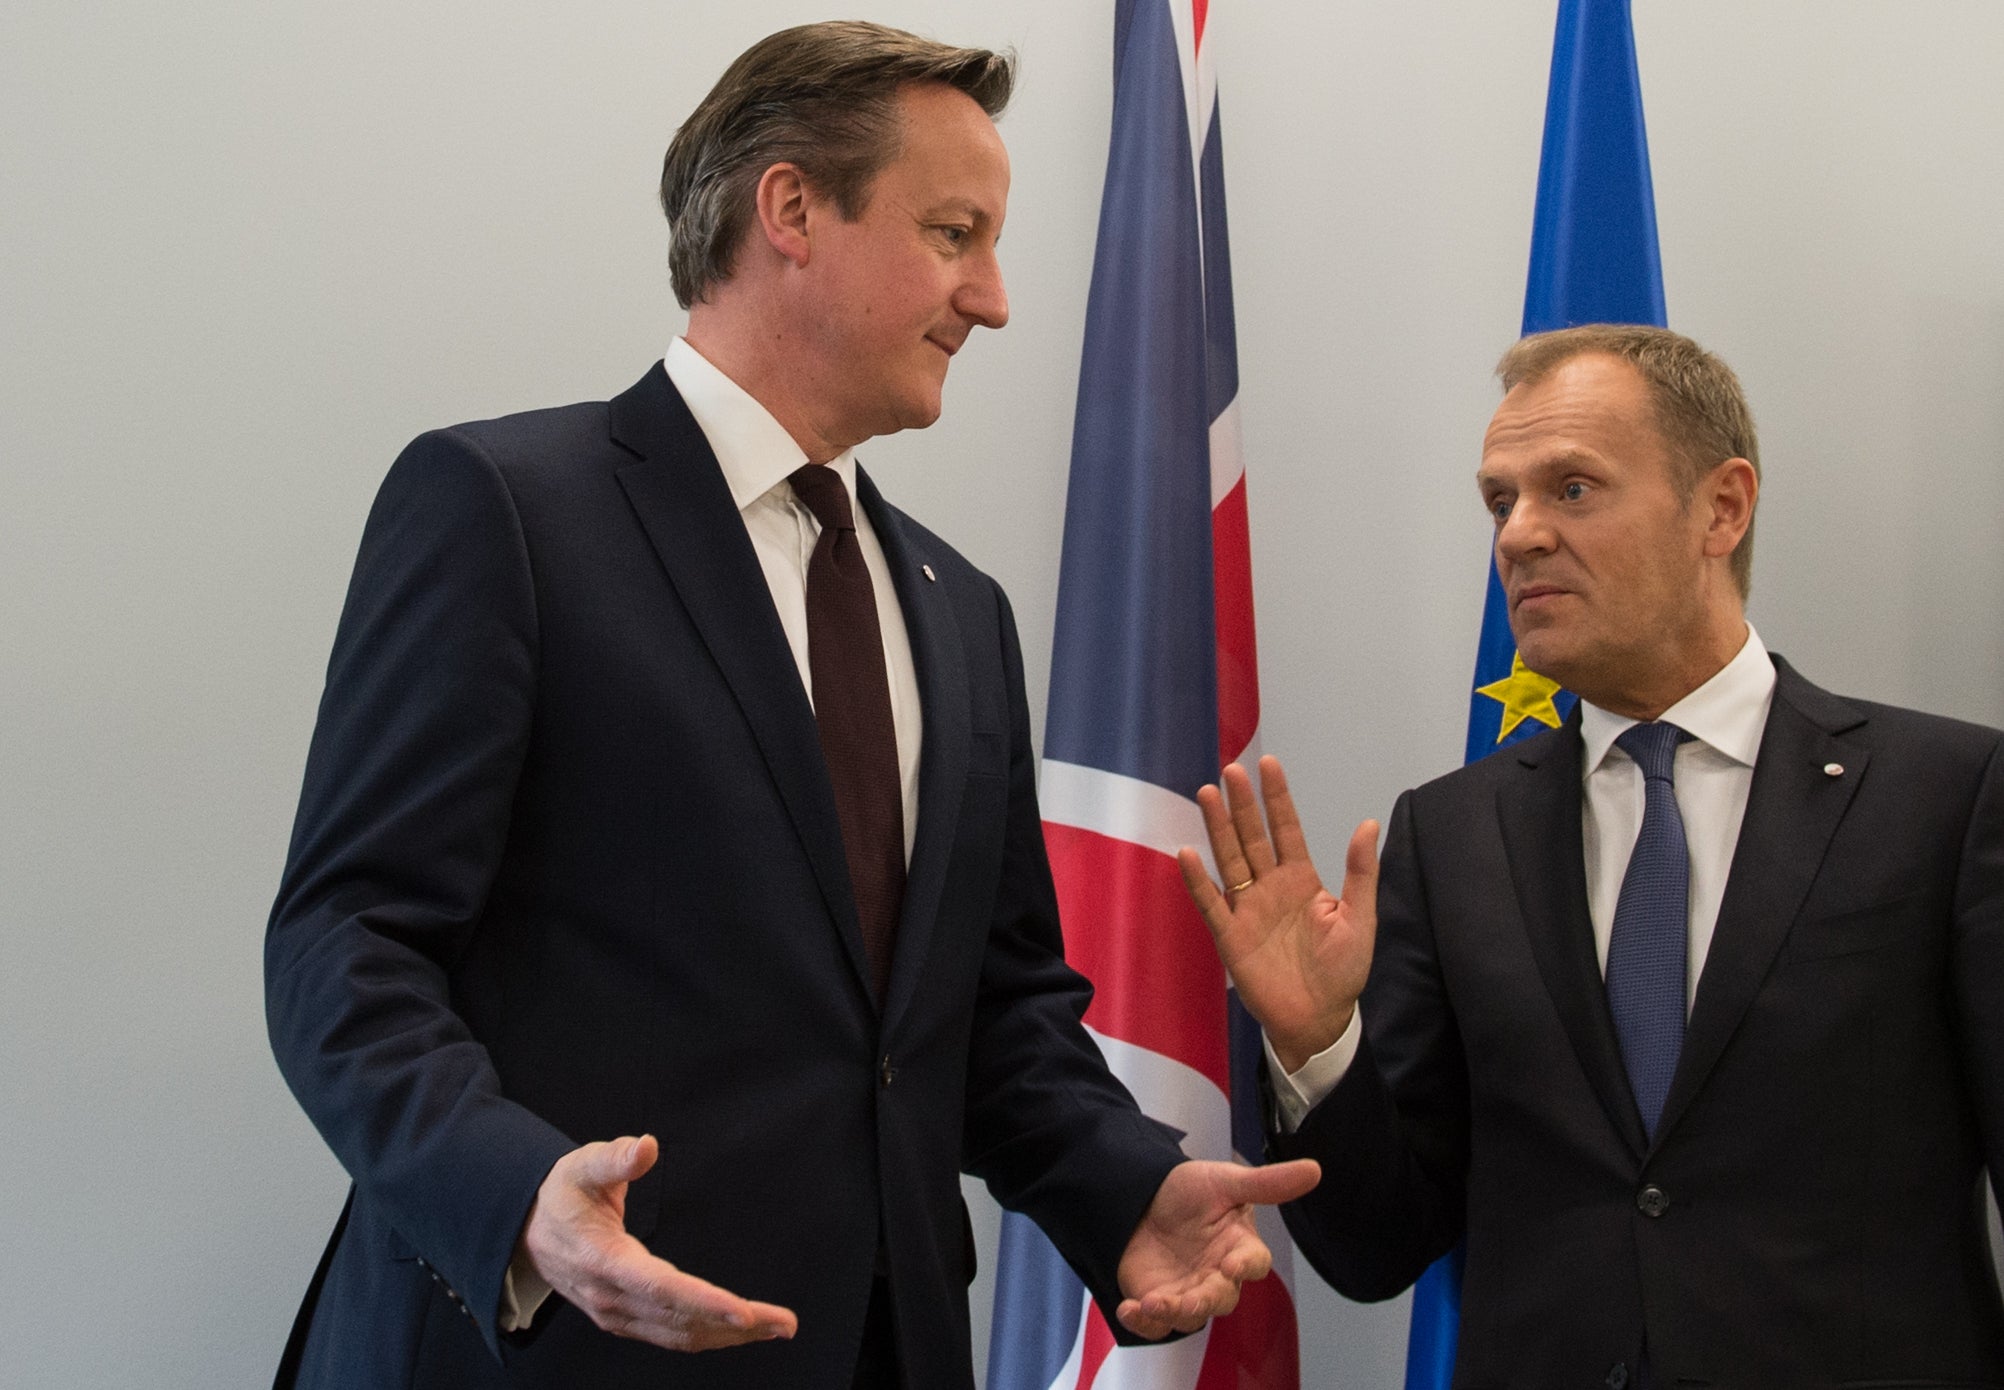 David Cameron met European leaders in Riga, the capital of Latvia